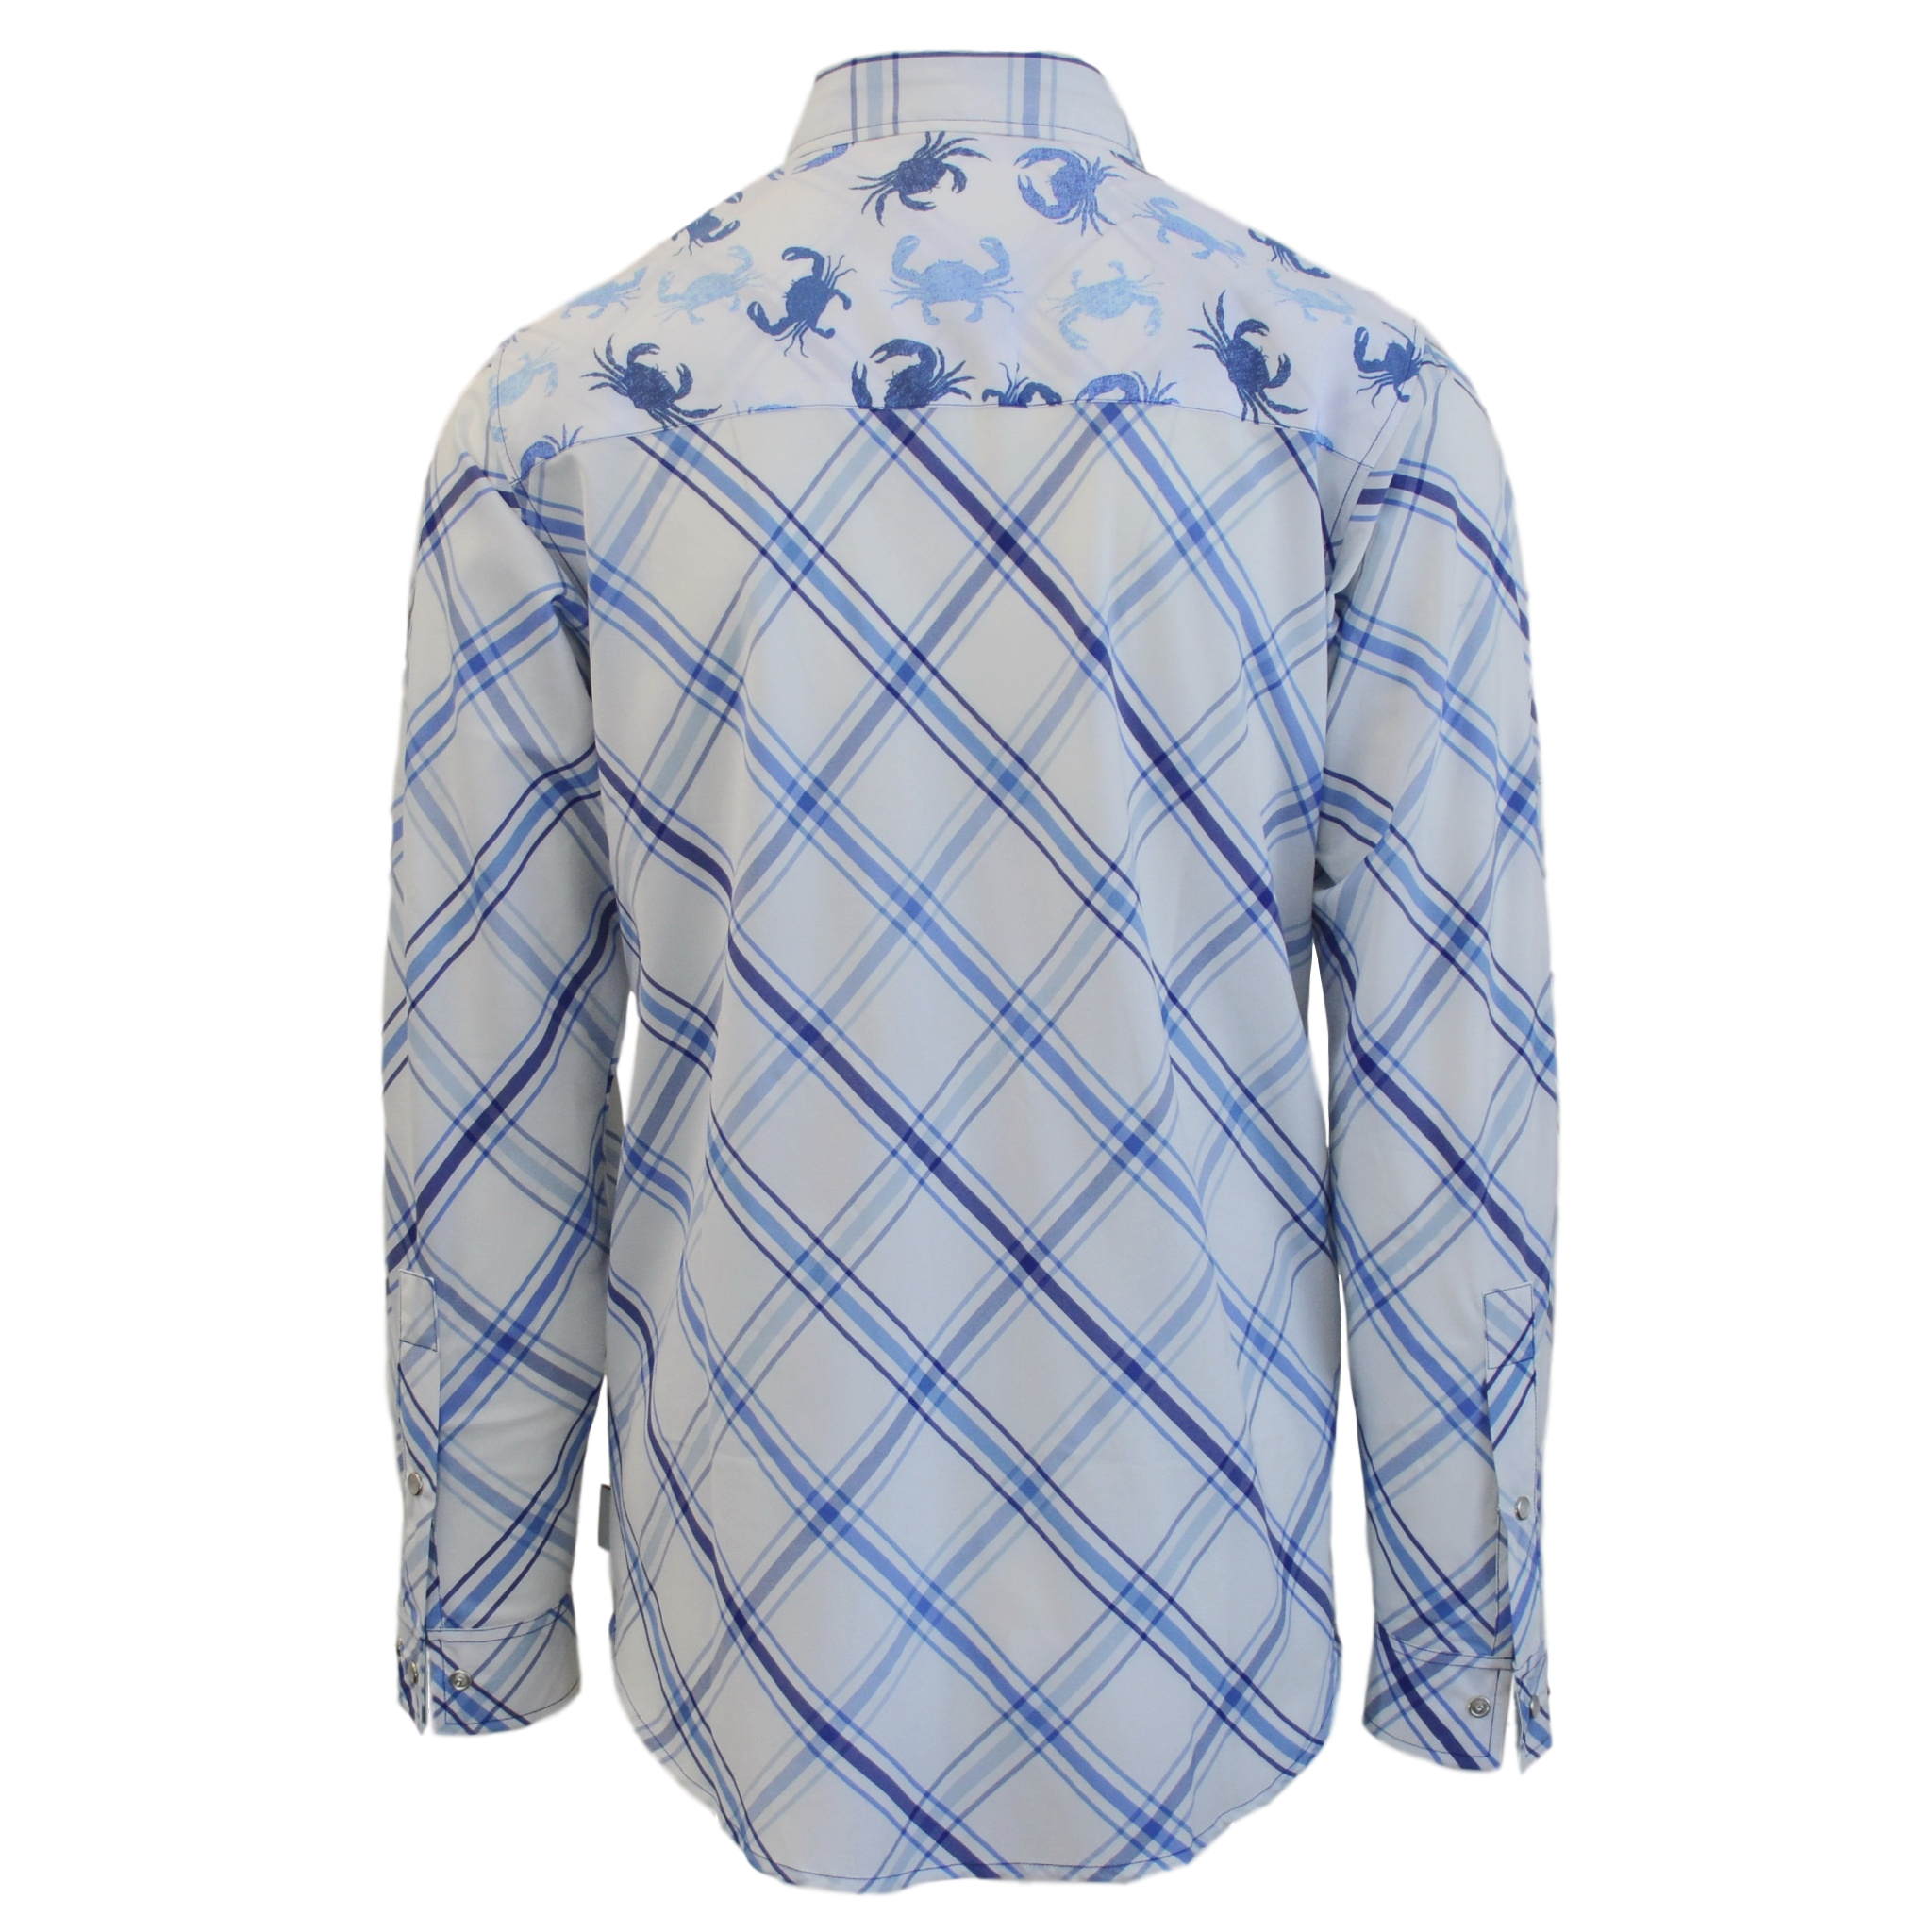 Classic fishing shirt for men - Dagon Apparel Company